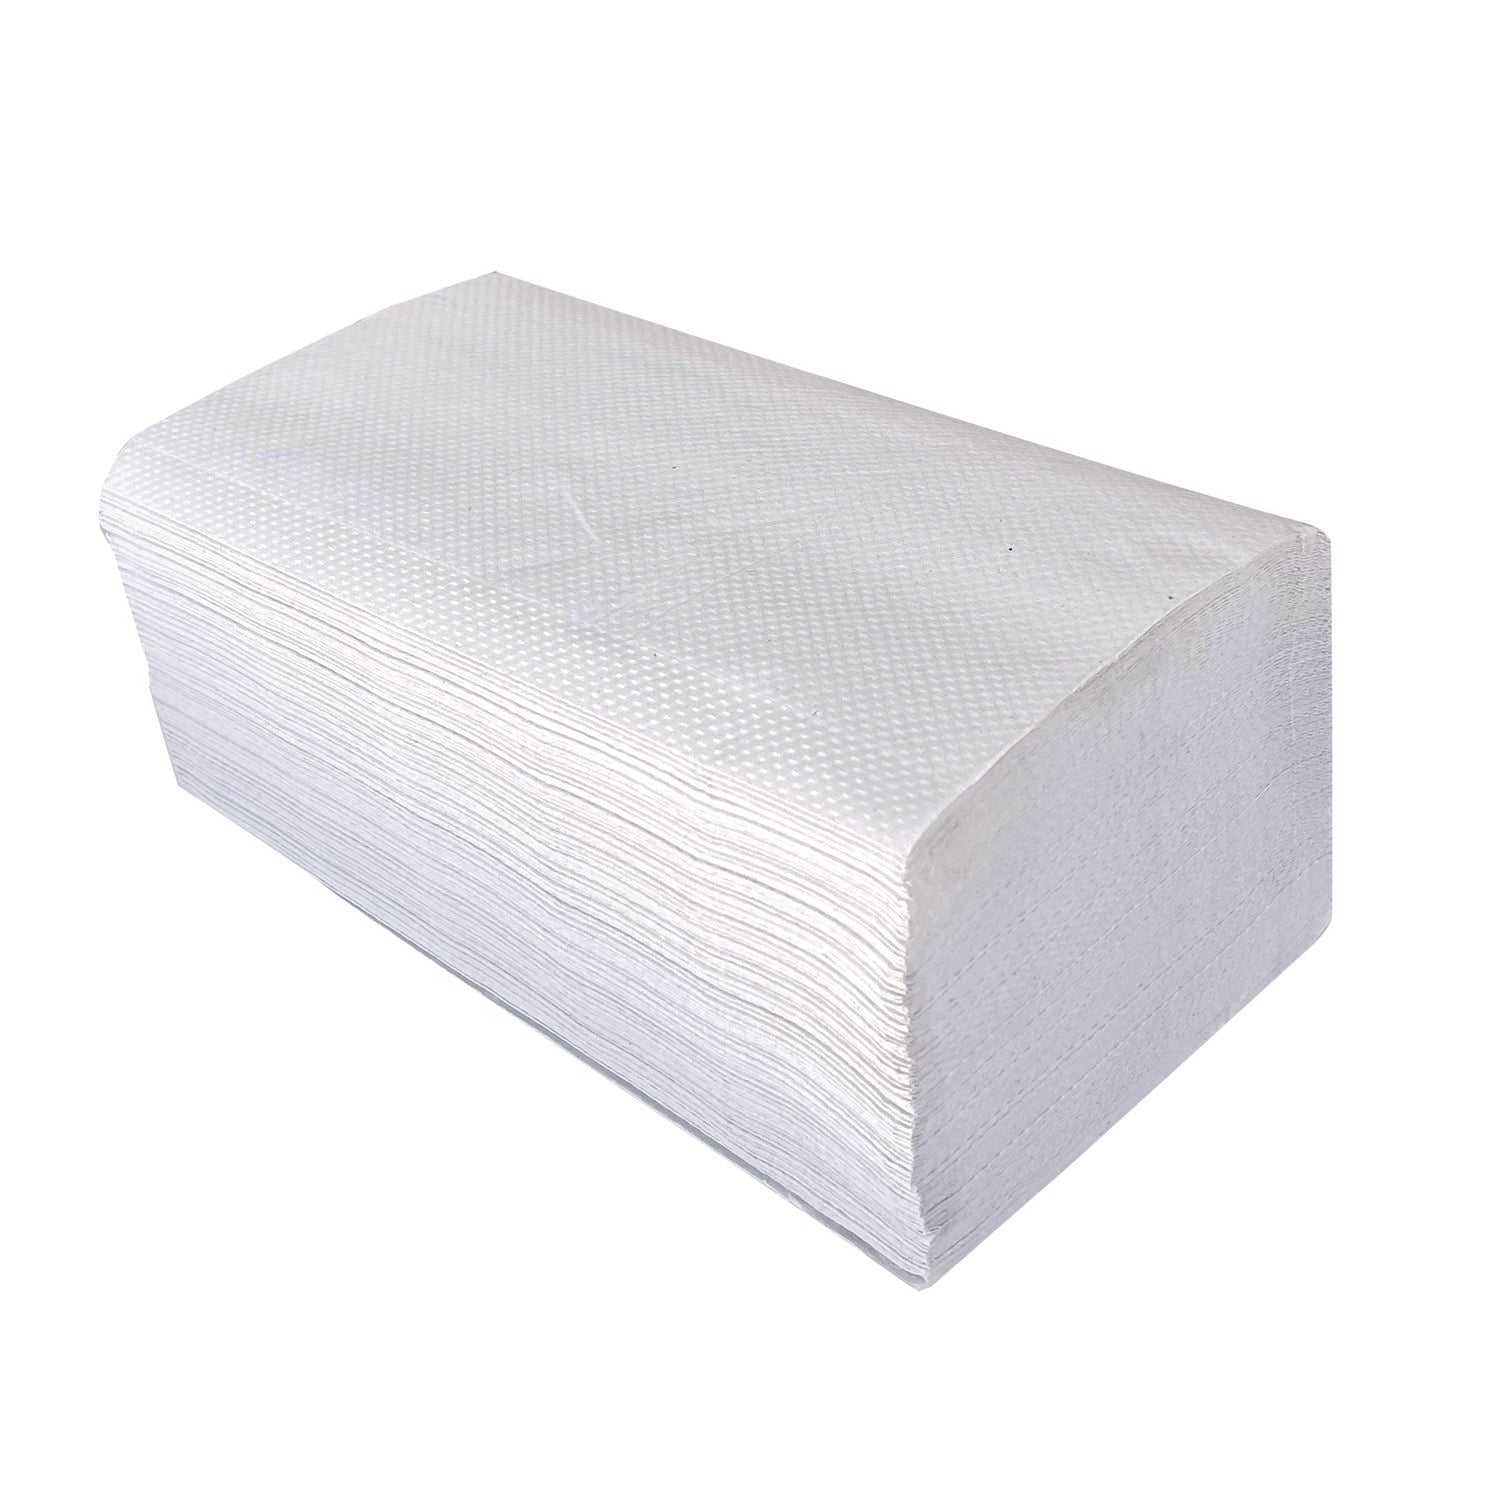 Boardwalk Green Single-Fold Towels, 1-Ply, 9.13 x 10.25, Natural White, 250/Pack, 16 Packs/Carton - 1